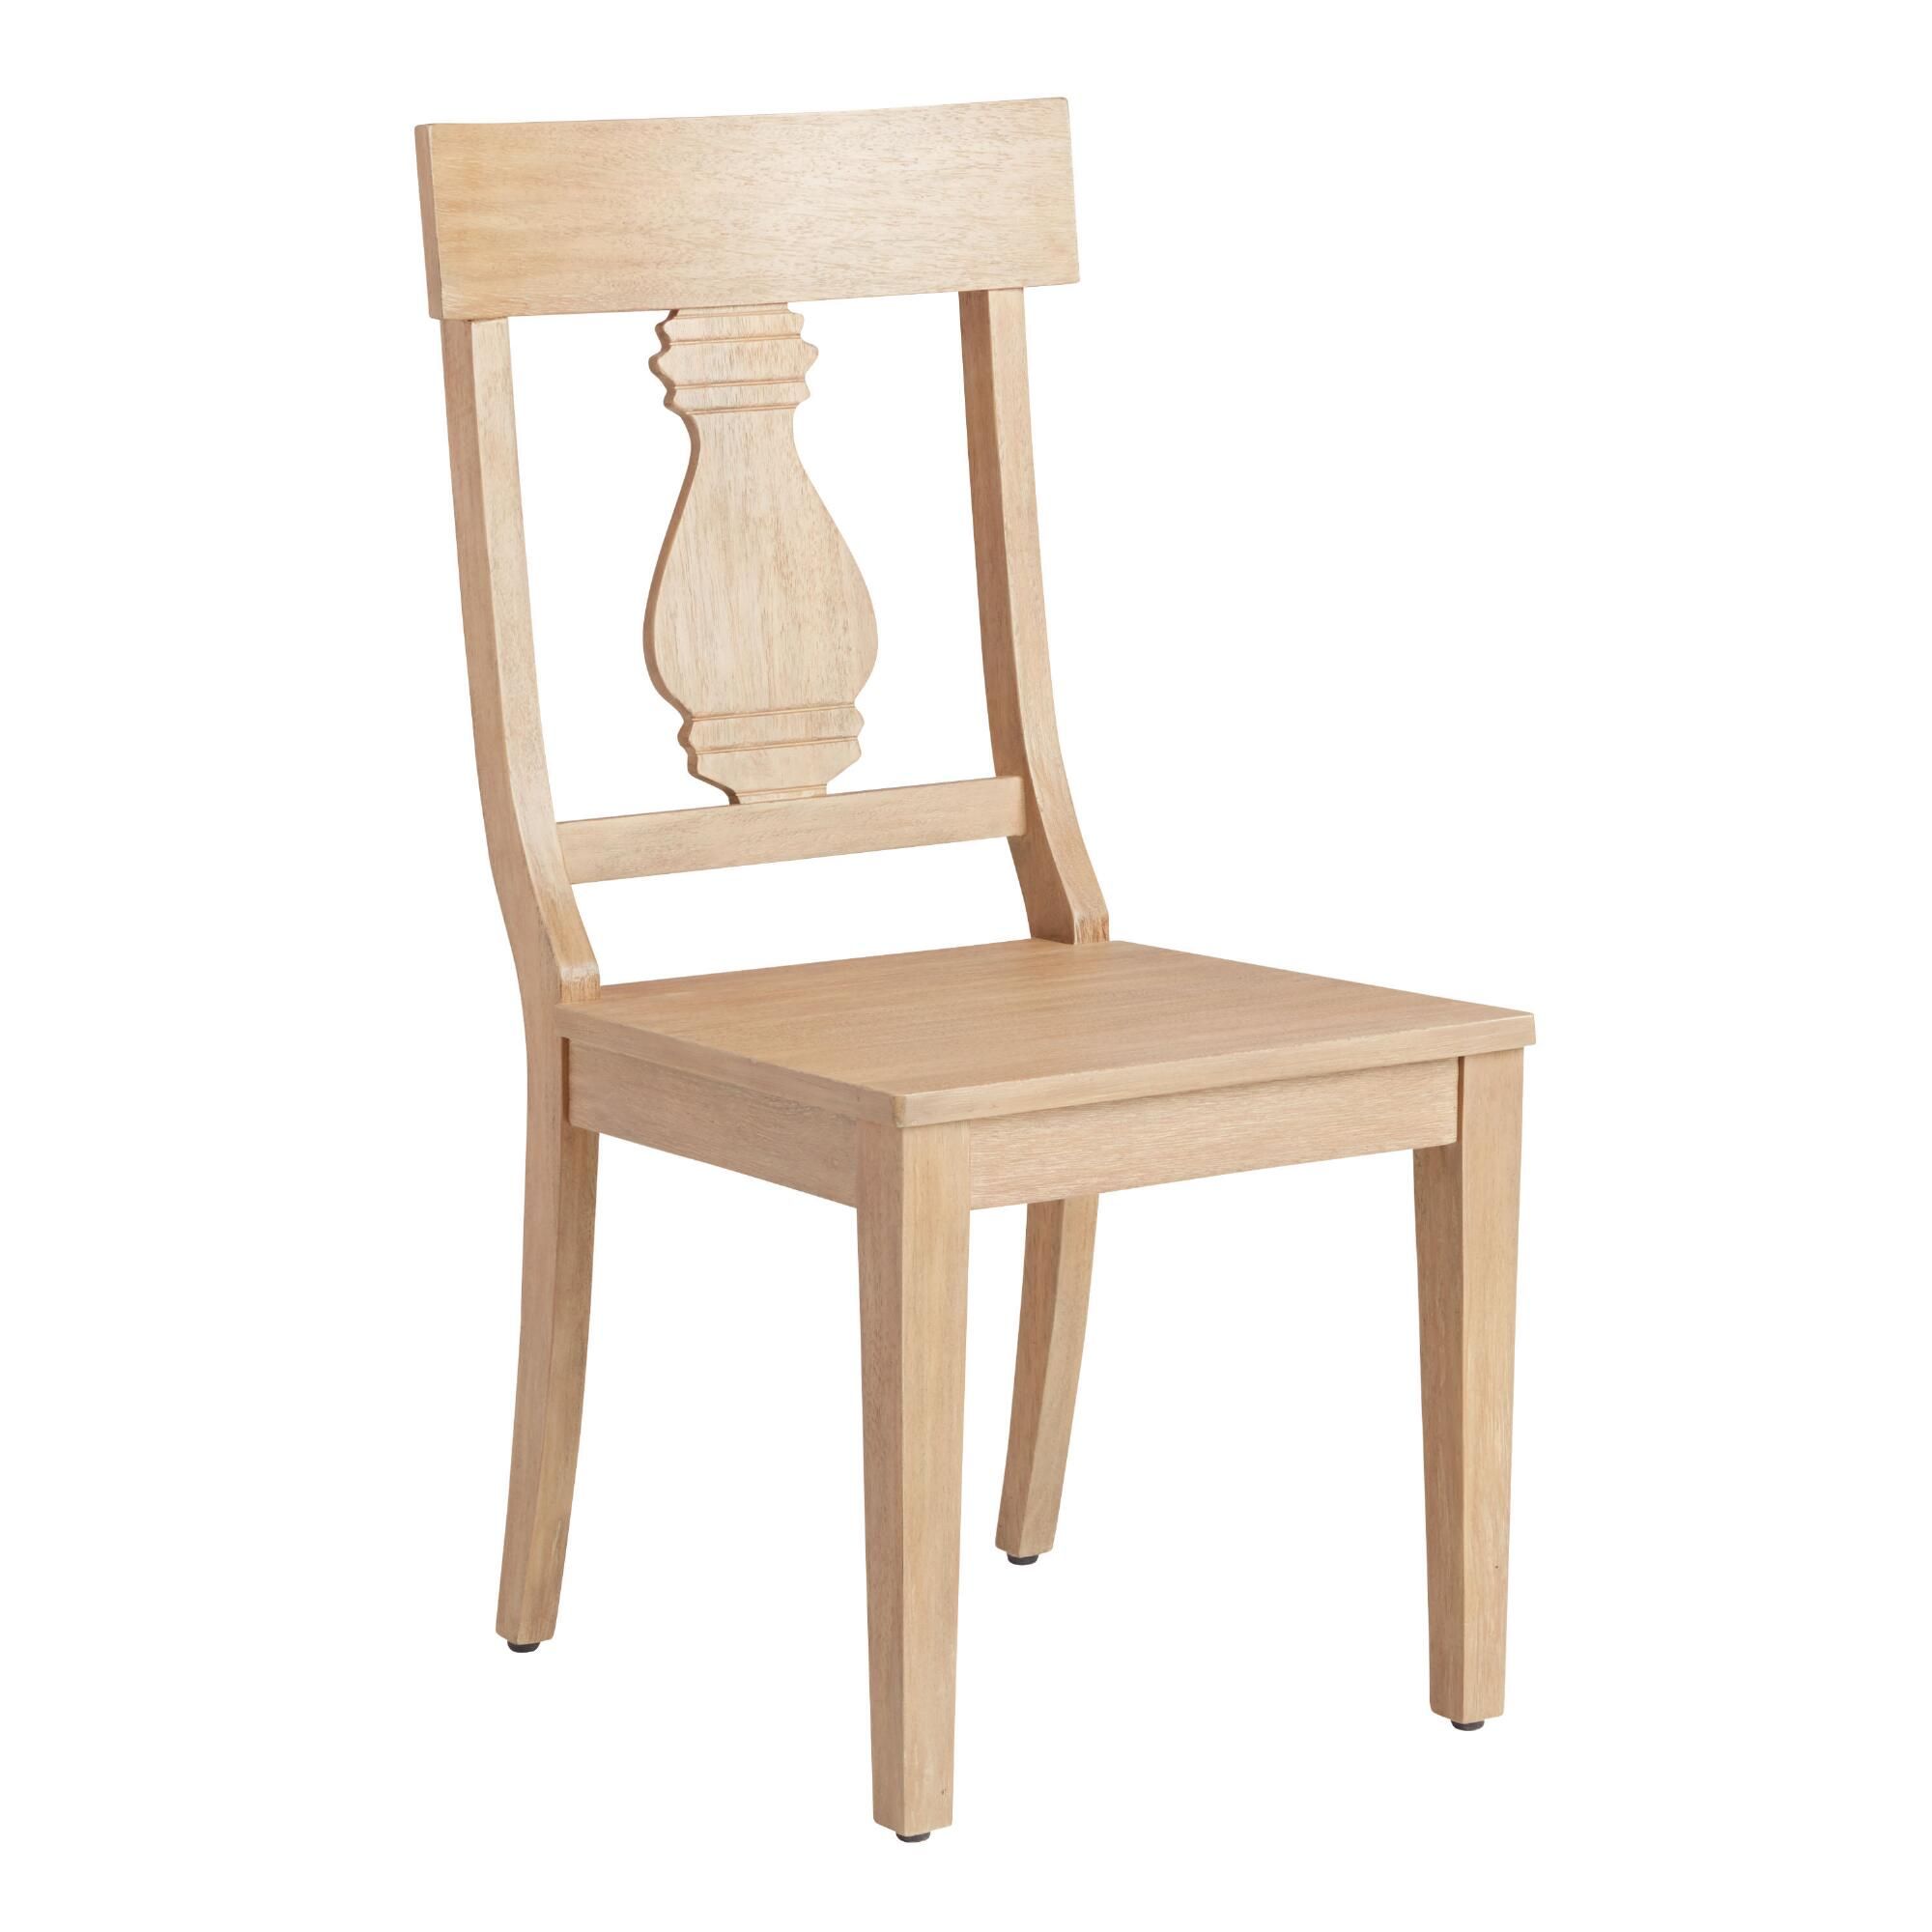 Avila Washed Natural Wood Dining Chairs Set of 2 | World Market